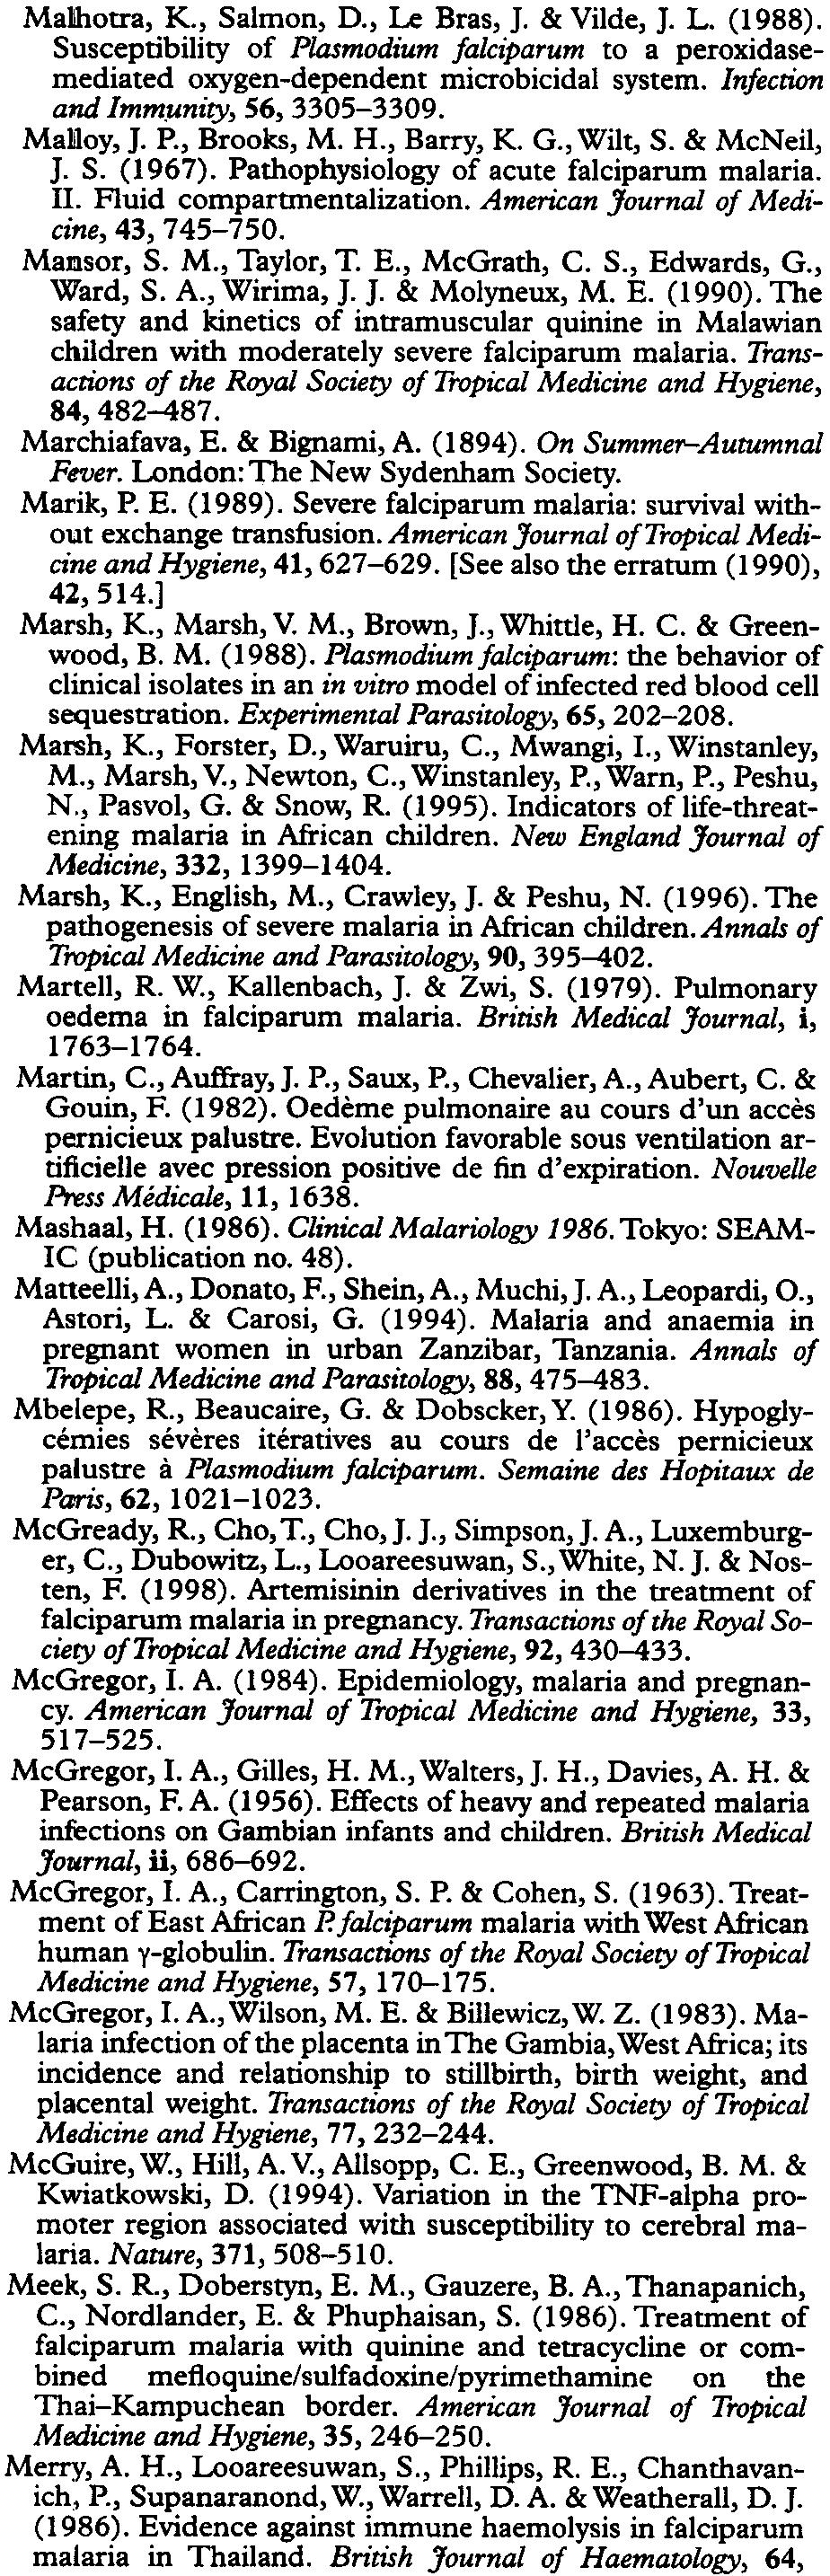 American Journal of Medicine, 43,745-750. Mamsor, S. M., Taylor, T. E., McGrath, C. S., Edwards, G., Ward, S. A., Wirima, I. I. & Molyneux, M. E. (1990).